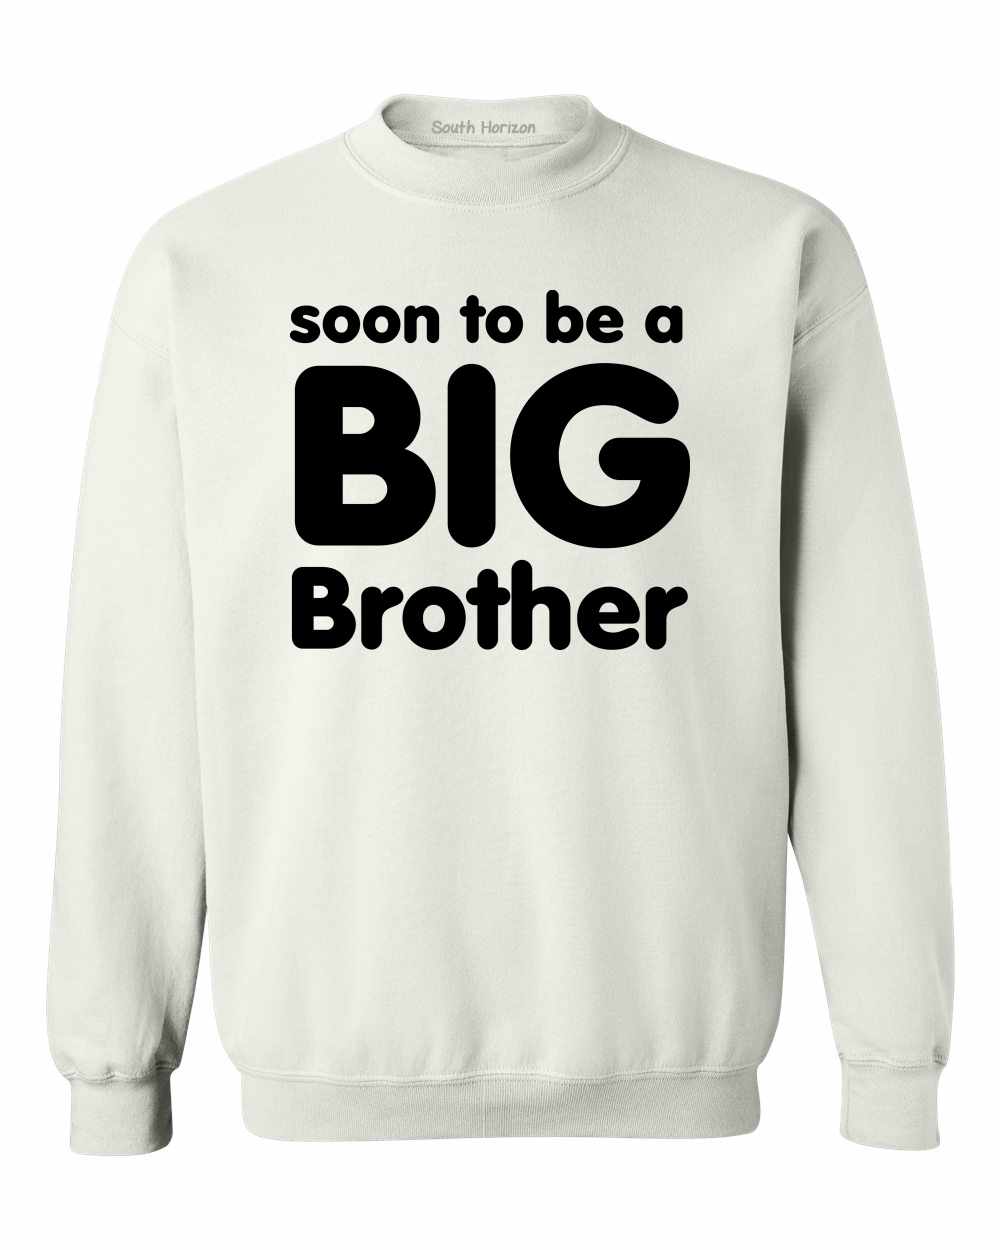 Soon to be a BIG BROTHER on SweatShirt (#590-11)